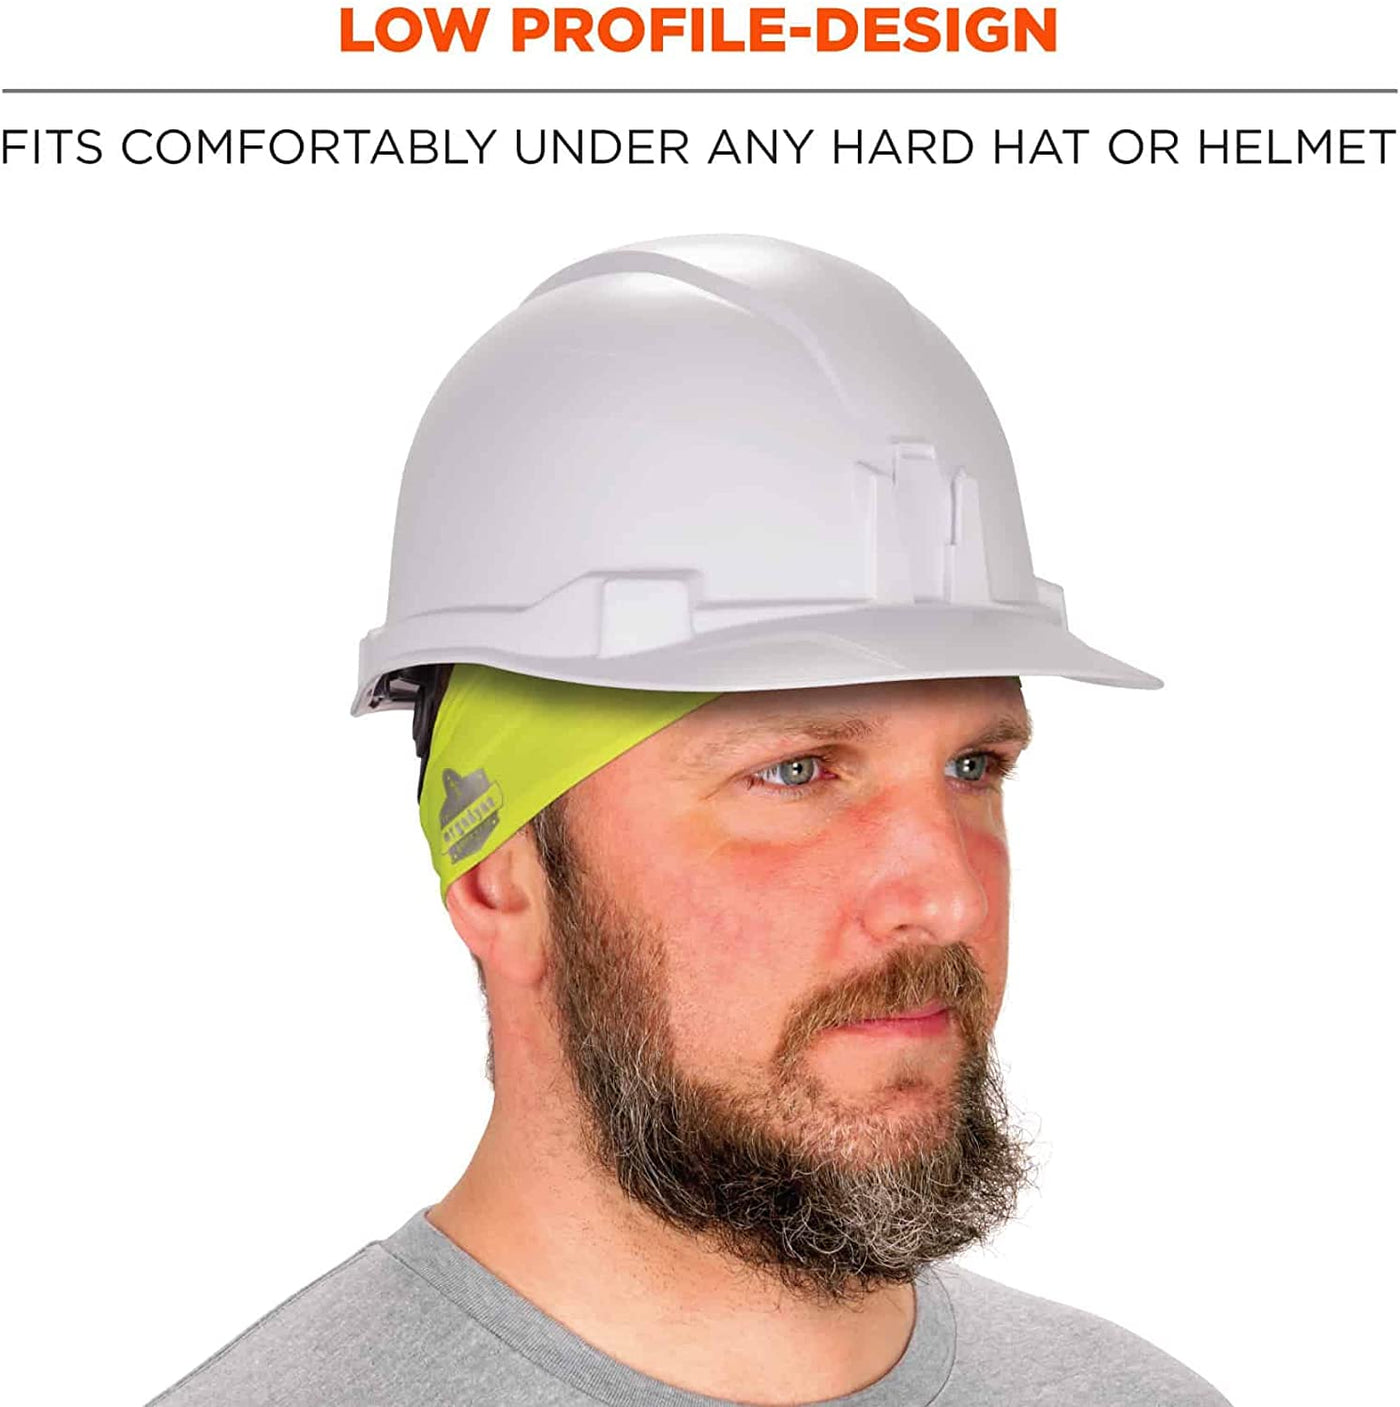 Ergodyne Chill Its 6634 Cooling Headband, Sports Headbands for Men and Women, Moisture Wicking, Lime